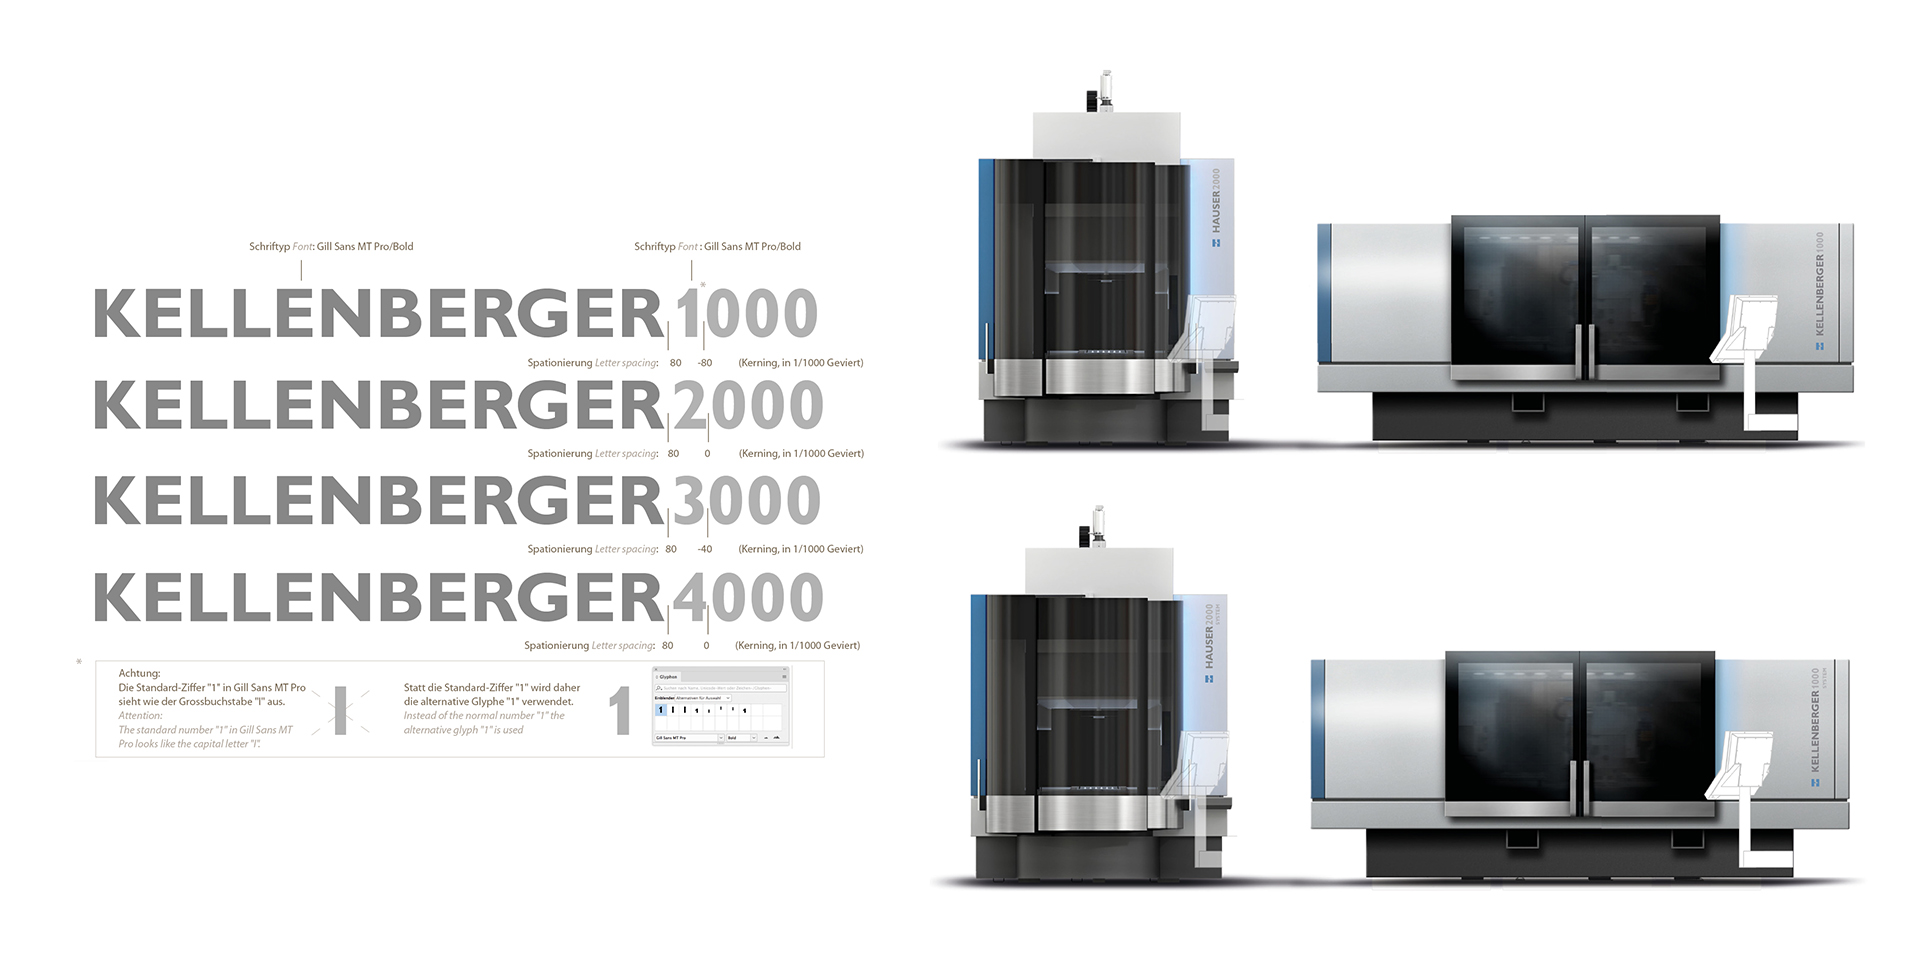 09 milani design agency cnc grinding machine Investitionsgueter Kellenberger2